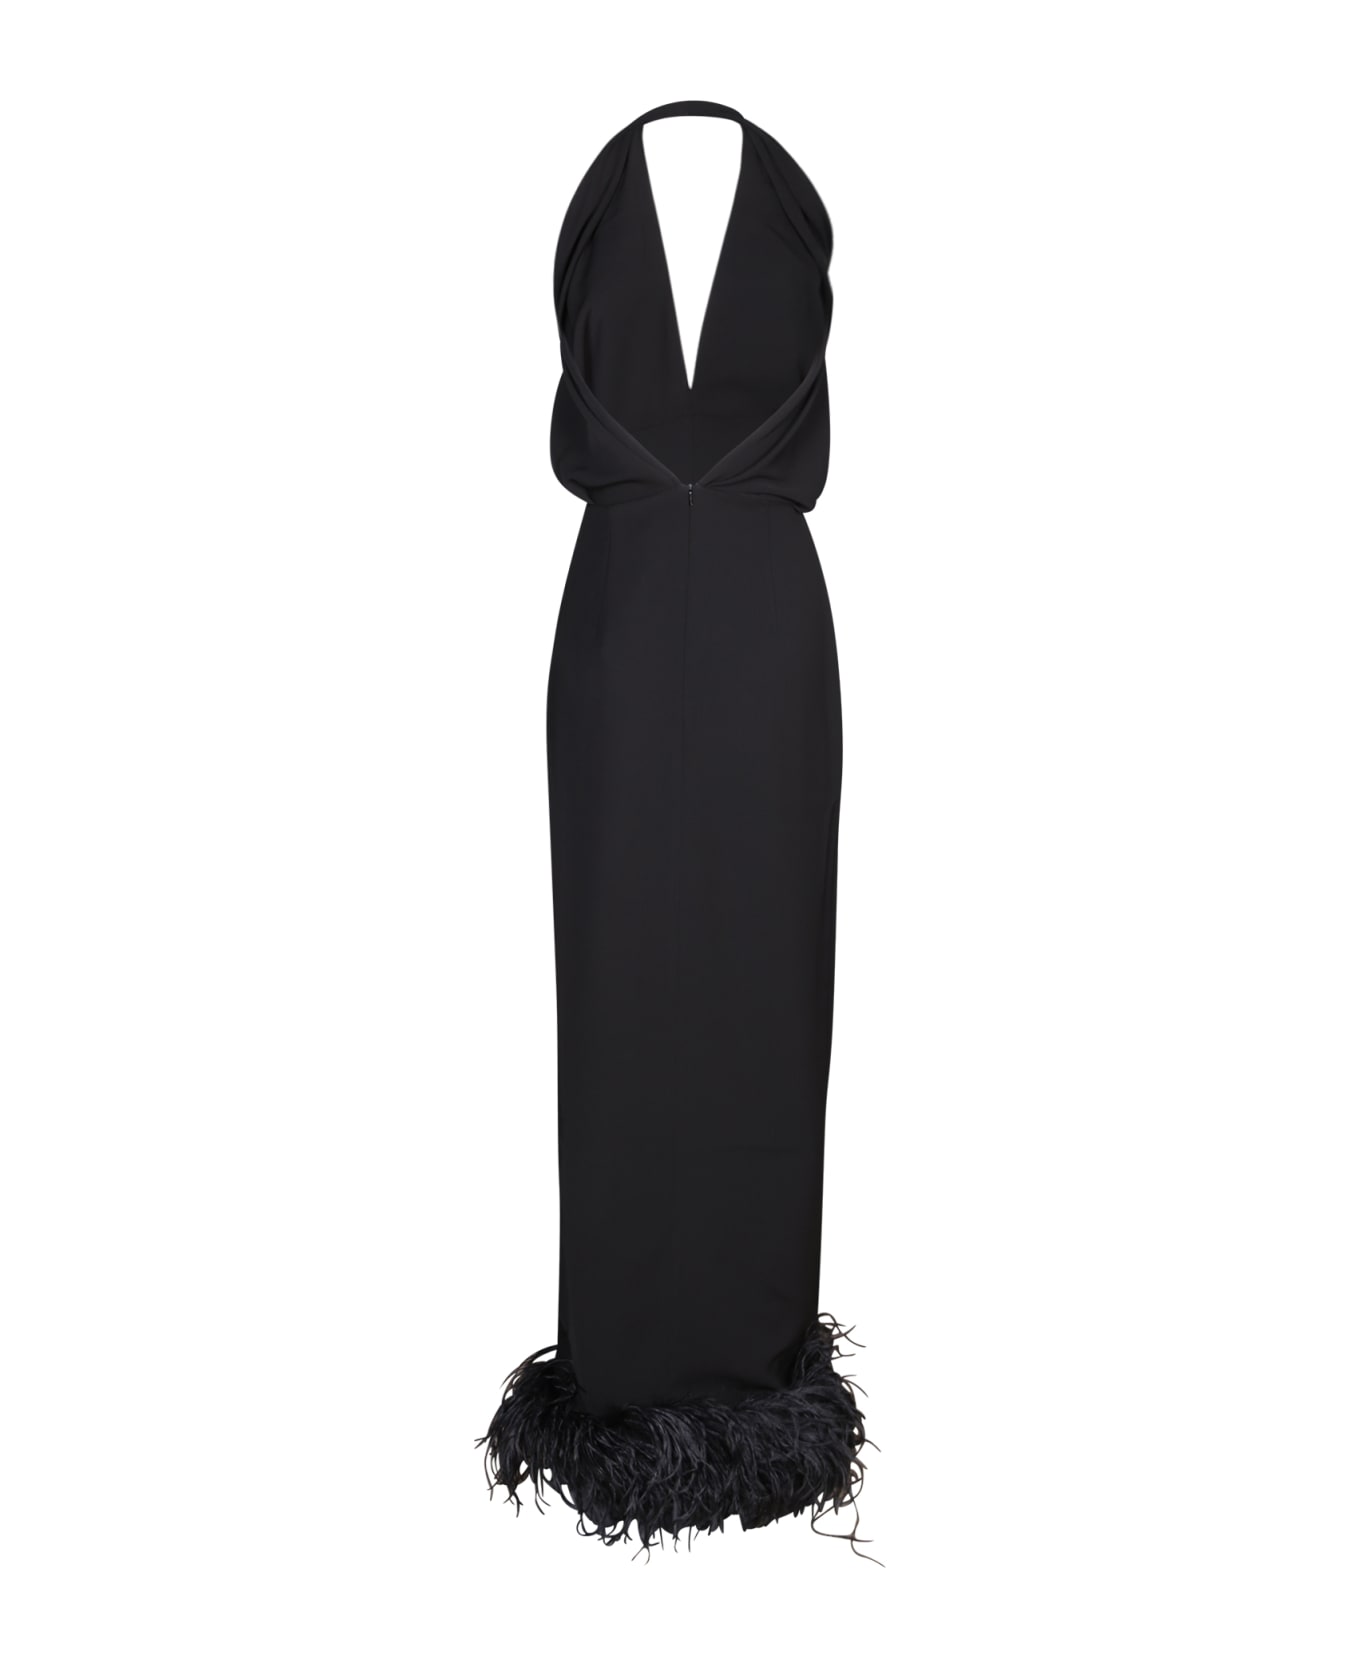 16arlington Isolde Black Dress - Black